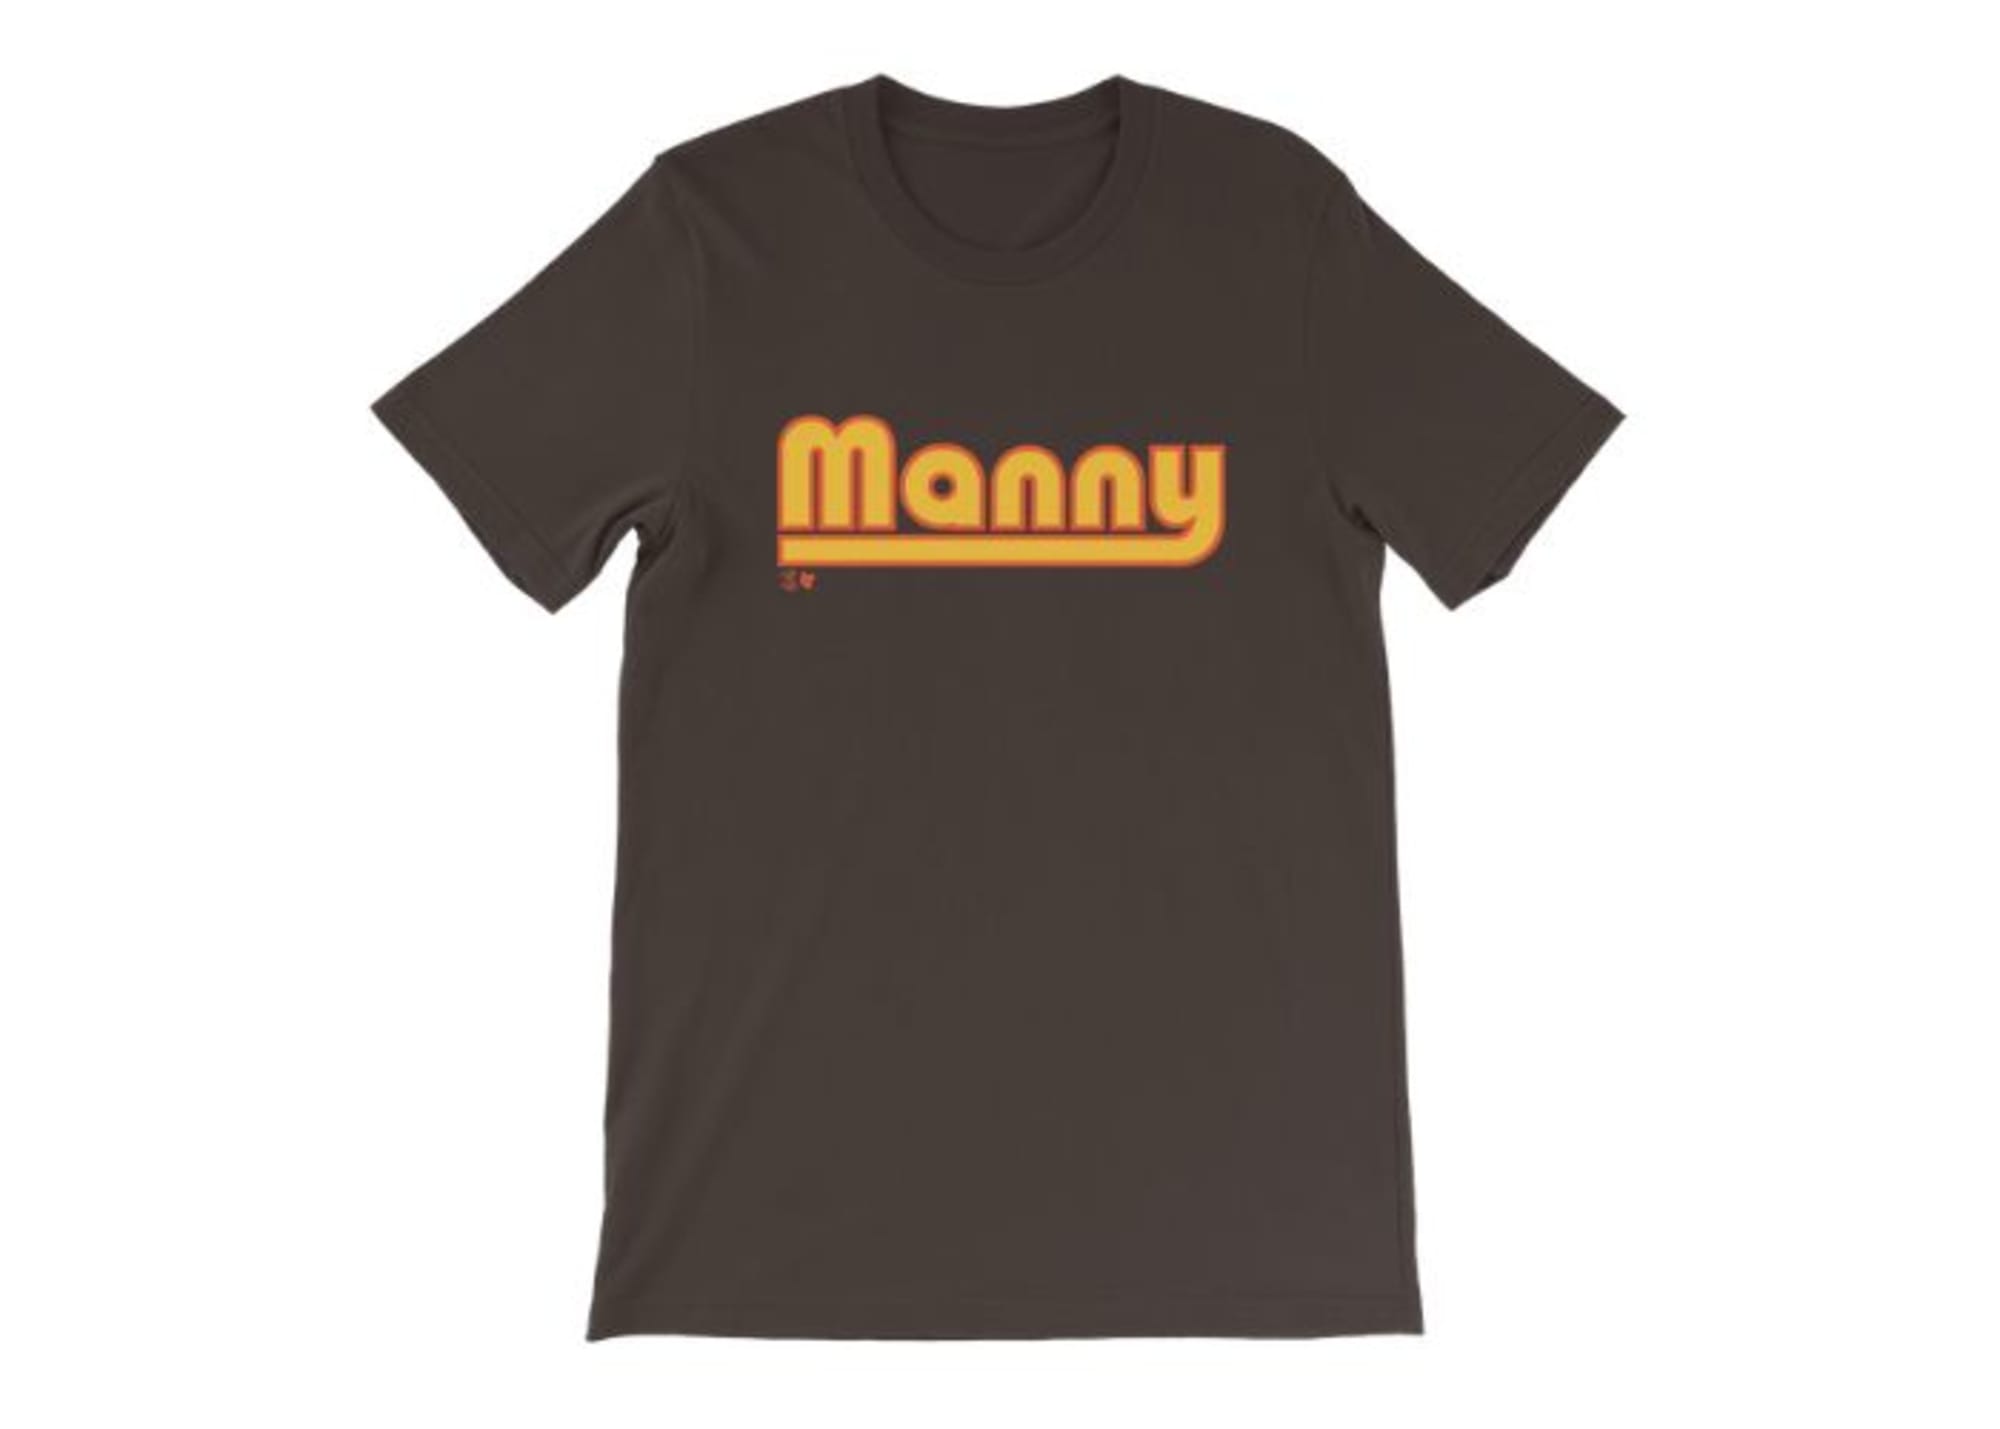 manny shirt